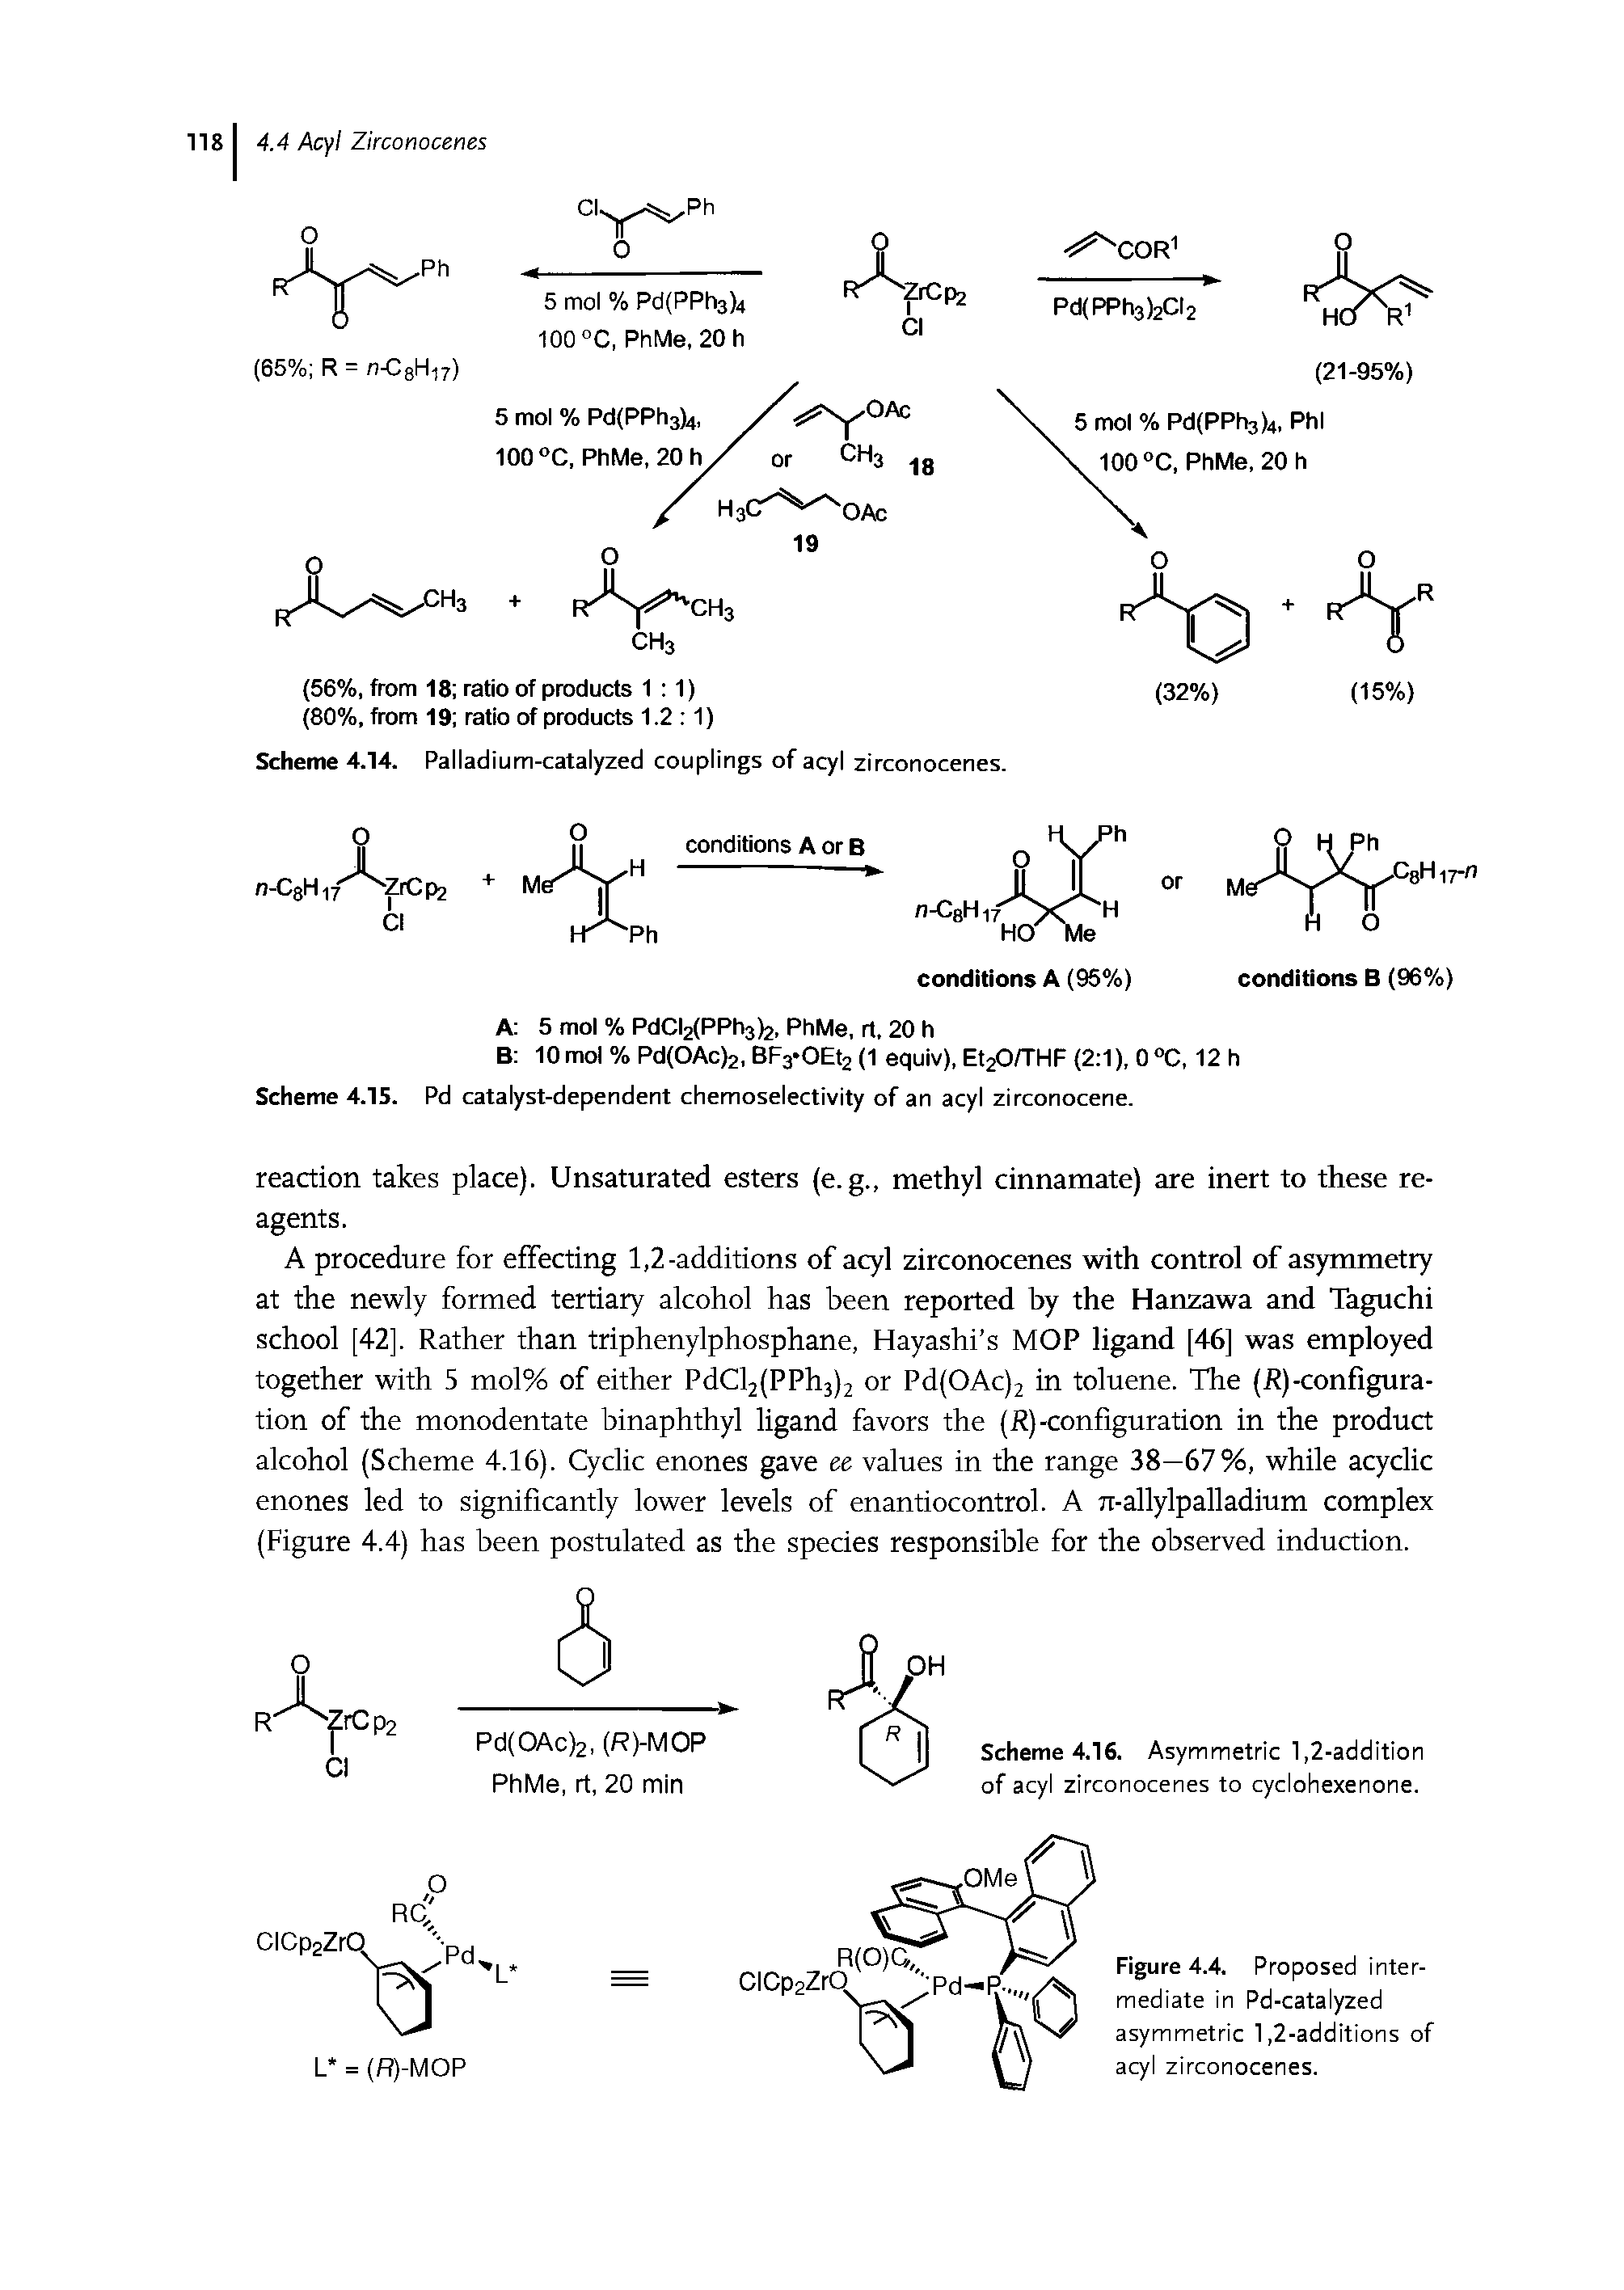 Scheme 4.14. Palladium-catalyzed couplings of acyl zirconocenes.